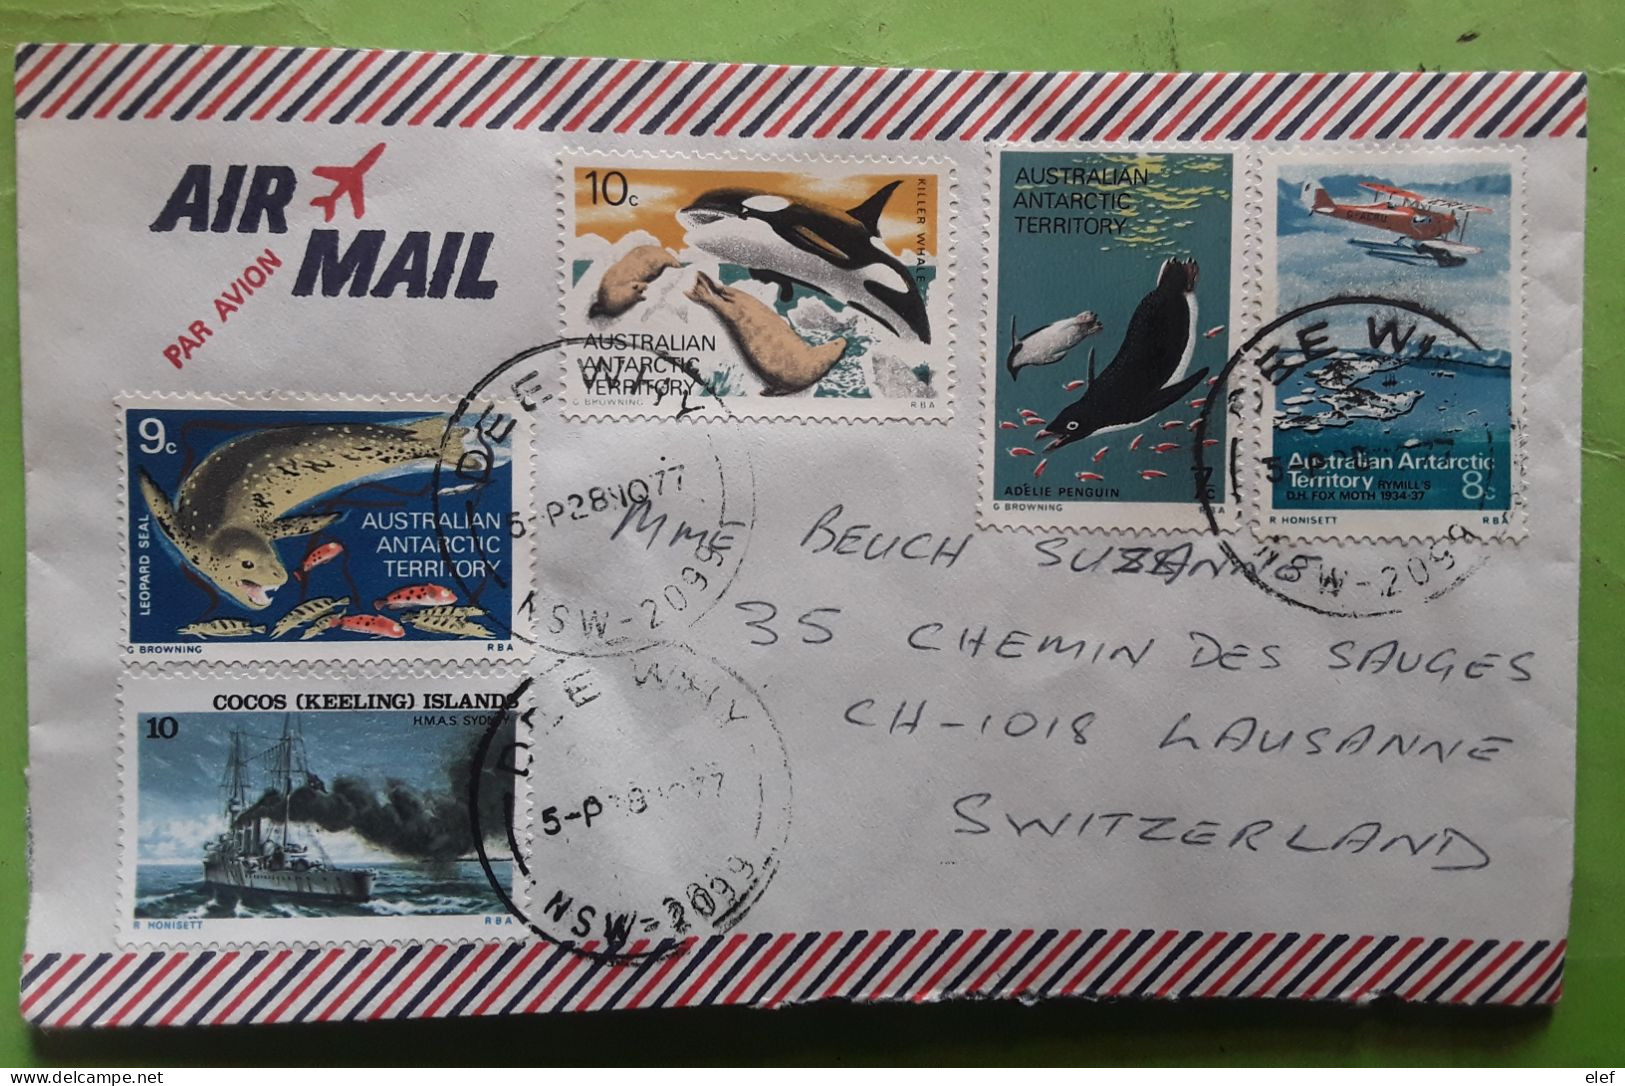 Australian Antarctic Territory DEE WHY Cover,Adelie Penguin,Killer Whale,Leopard Seal,Hydravion + COCOS ISLANDS,1977 - Briefe U. Dokumente